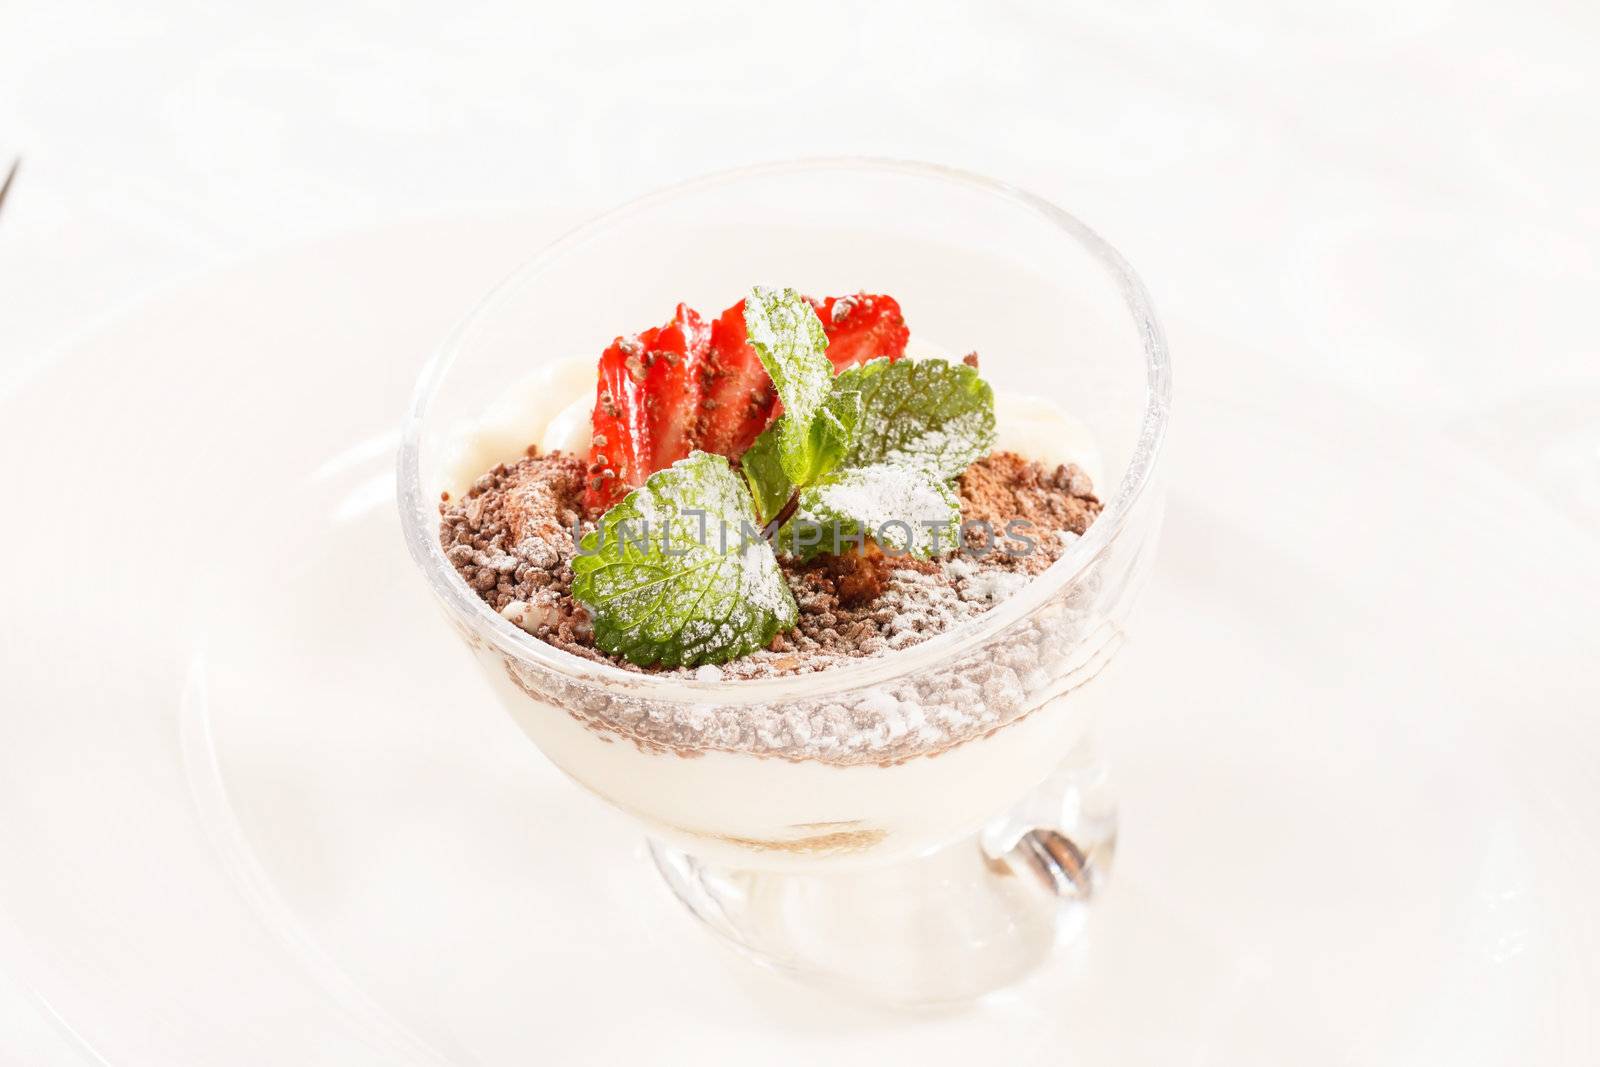 Tiramisu with strawberry by shebeko